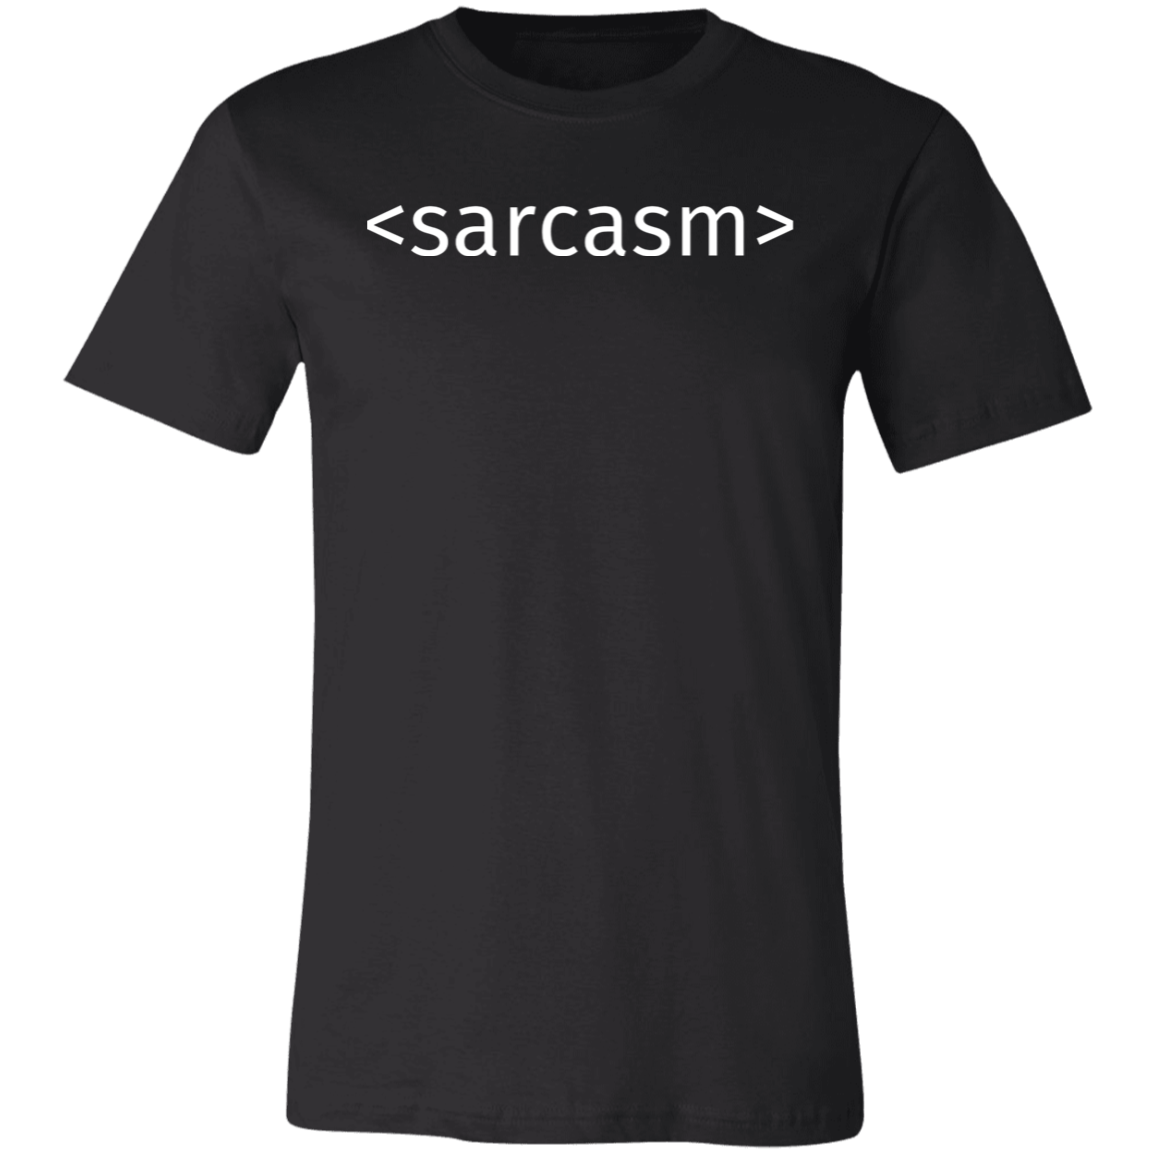 Sarcasm Tag Short-Sleeve T-Shirt